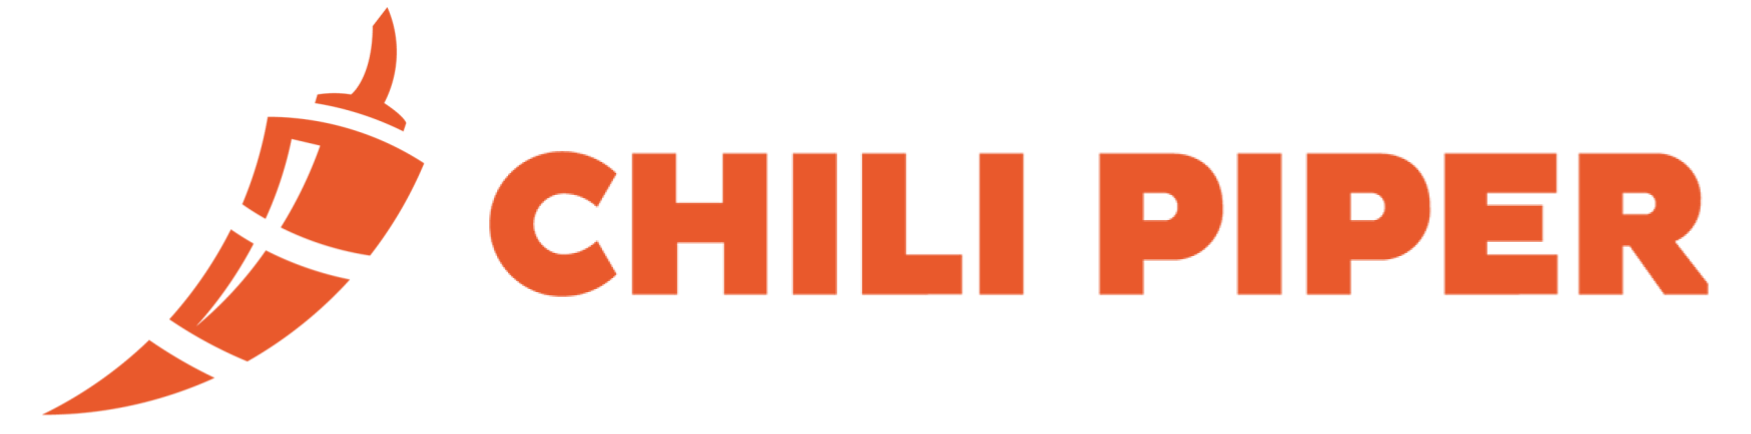 chili piper logo horizontal